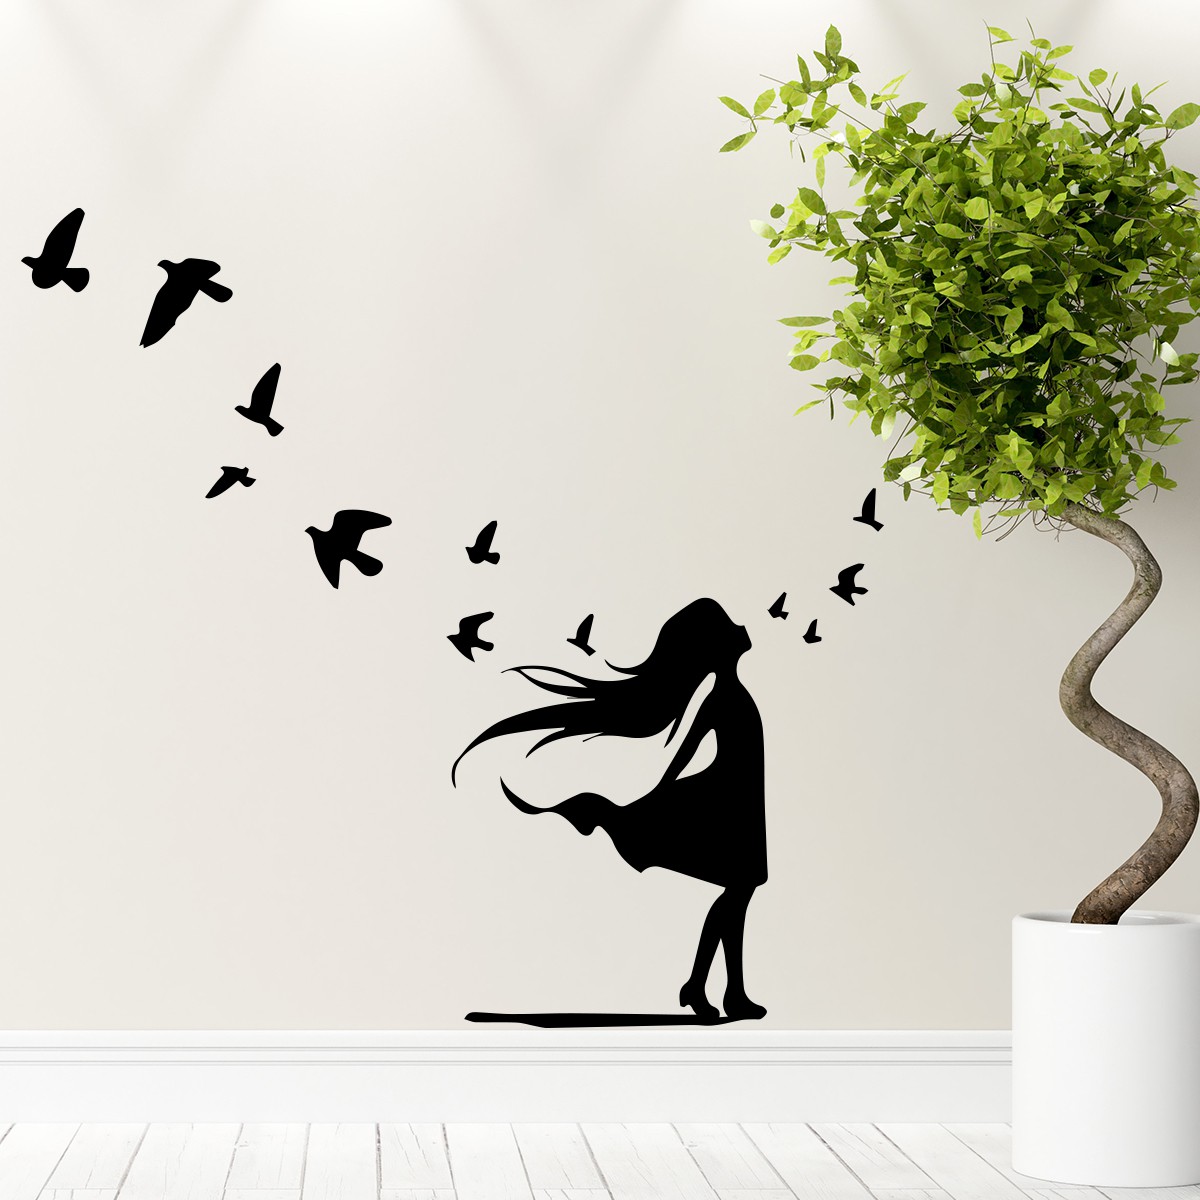 Sticker mural plante en forme d'oiseaux pas cher - Stickers Baroque  discount - stickers muraux - madeco-stickers